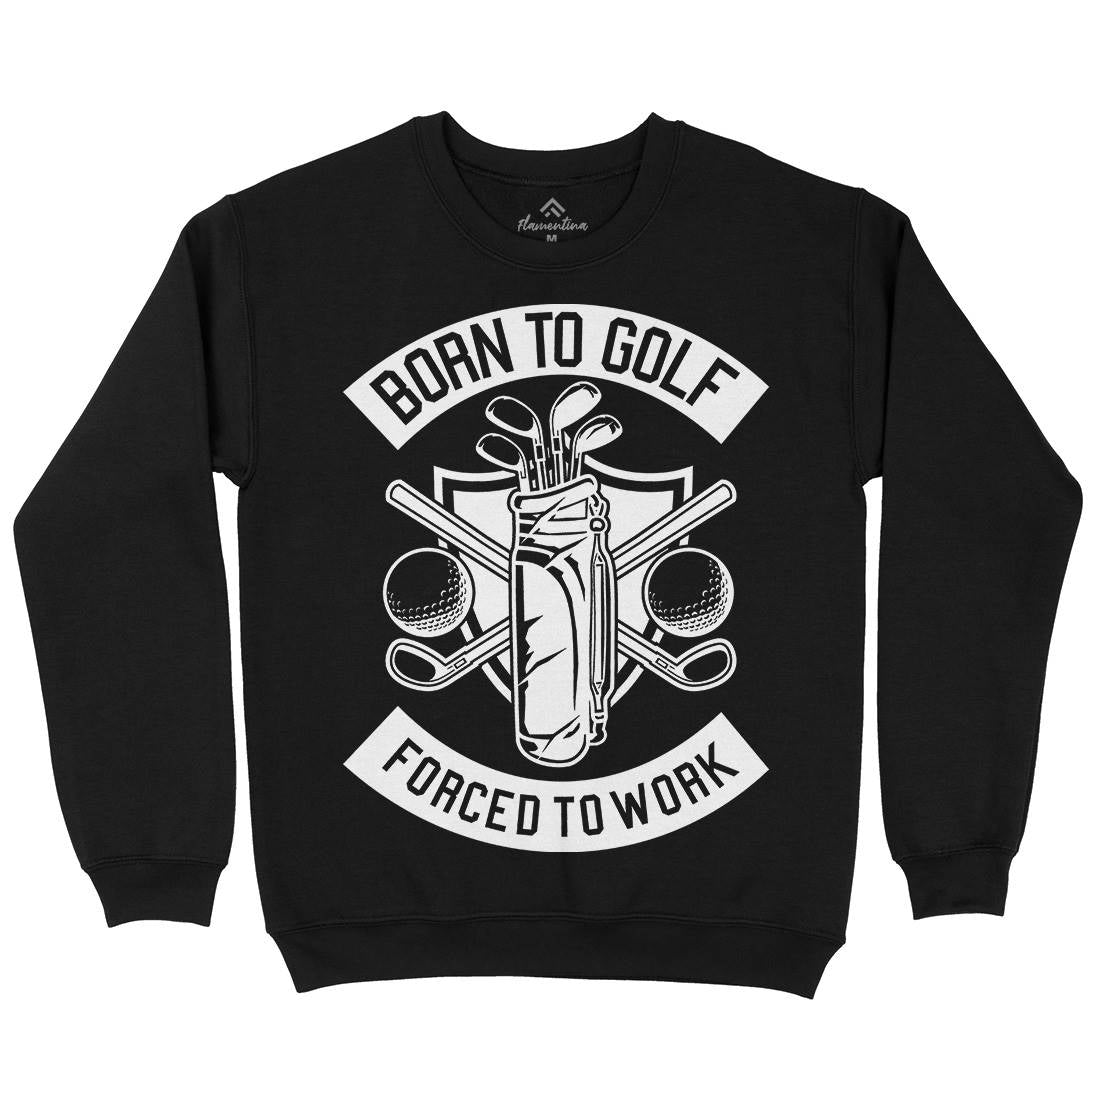 Born To Golf Kids Crew Neck Sweatshirt Sport B504